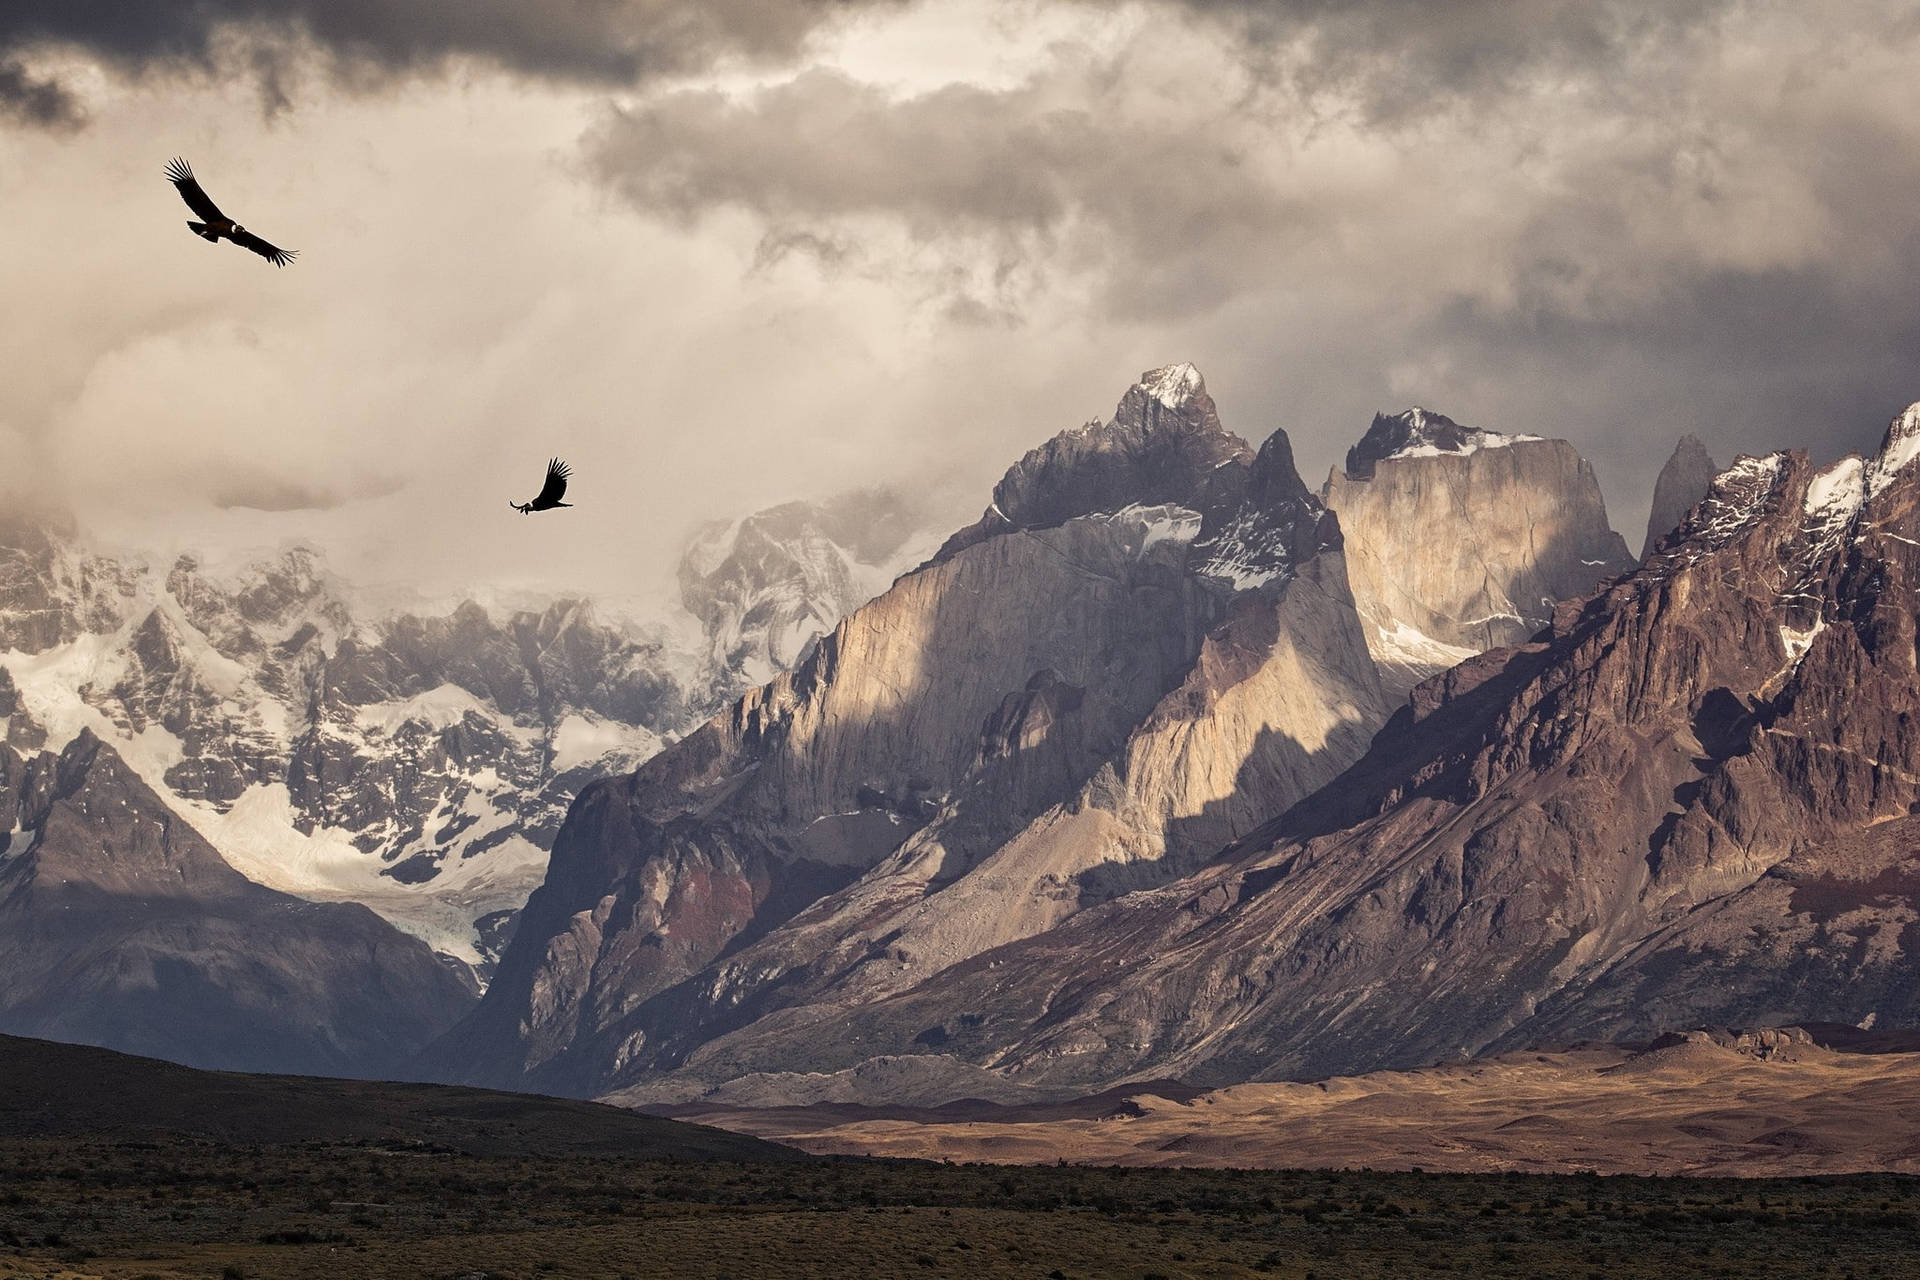 Patagonia Soaring Eagles